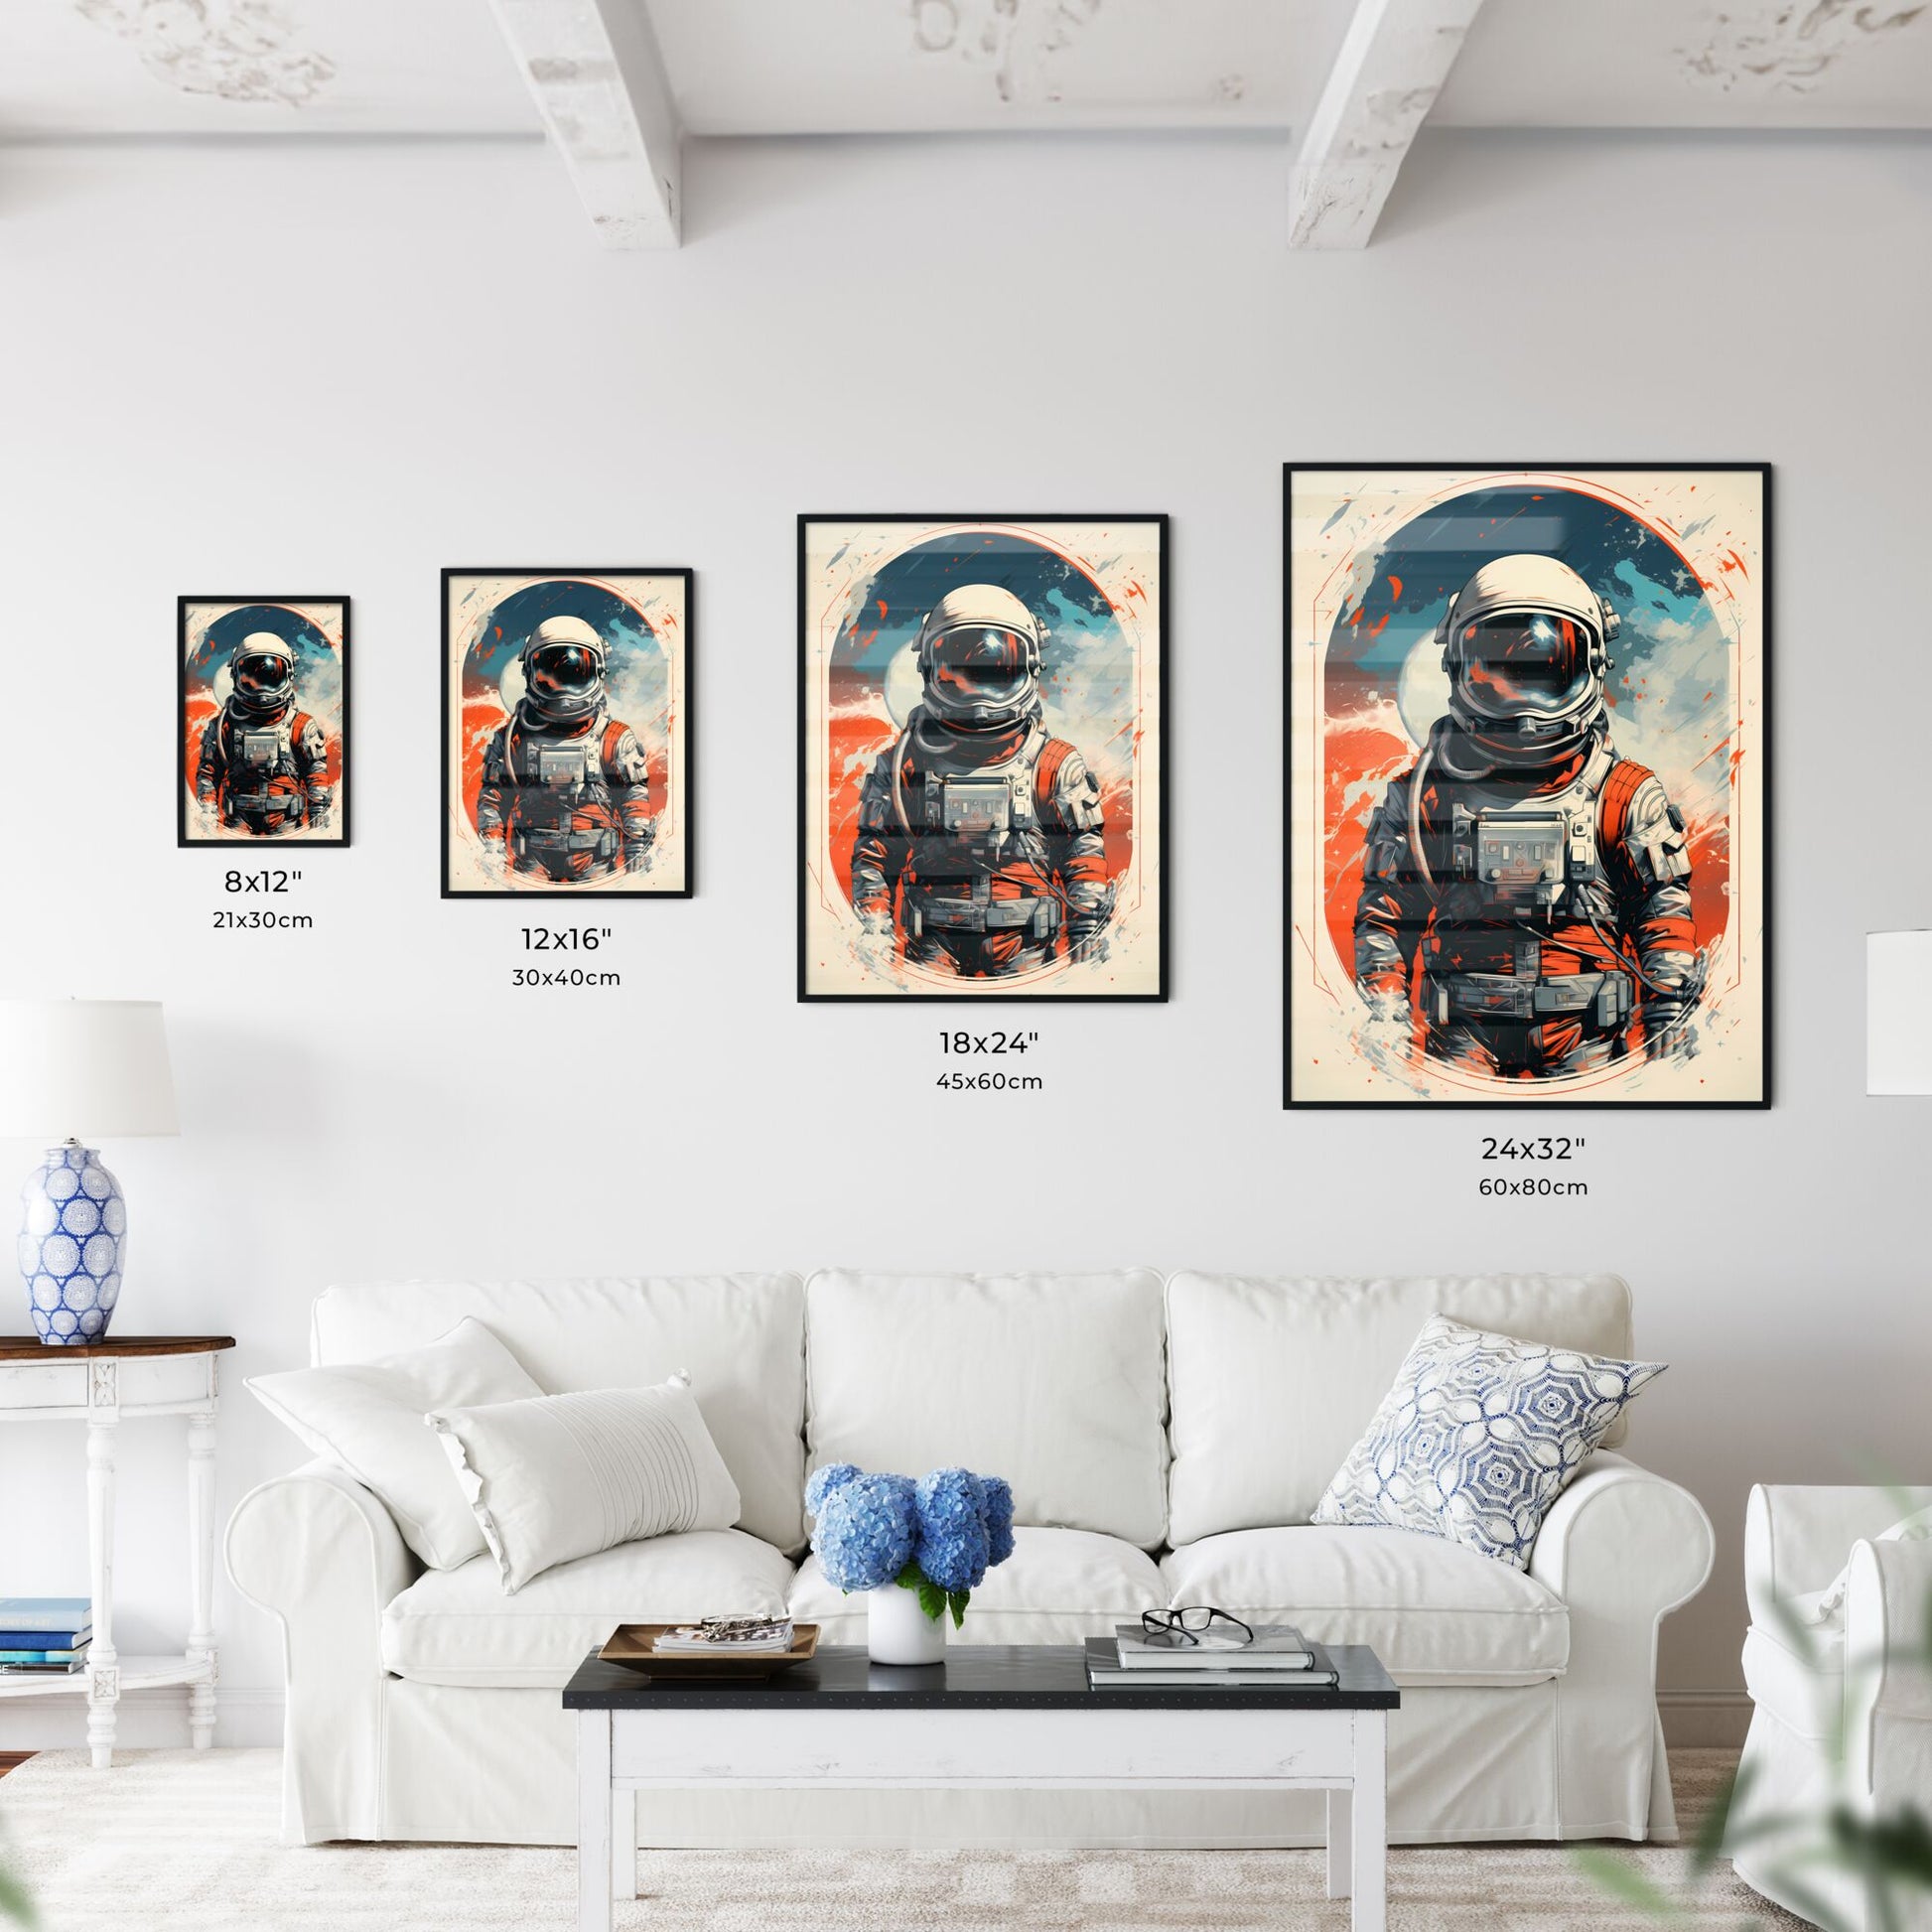 An Astronaut In A Space Suit Default Title